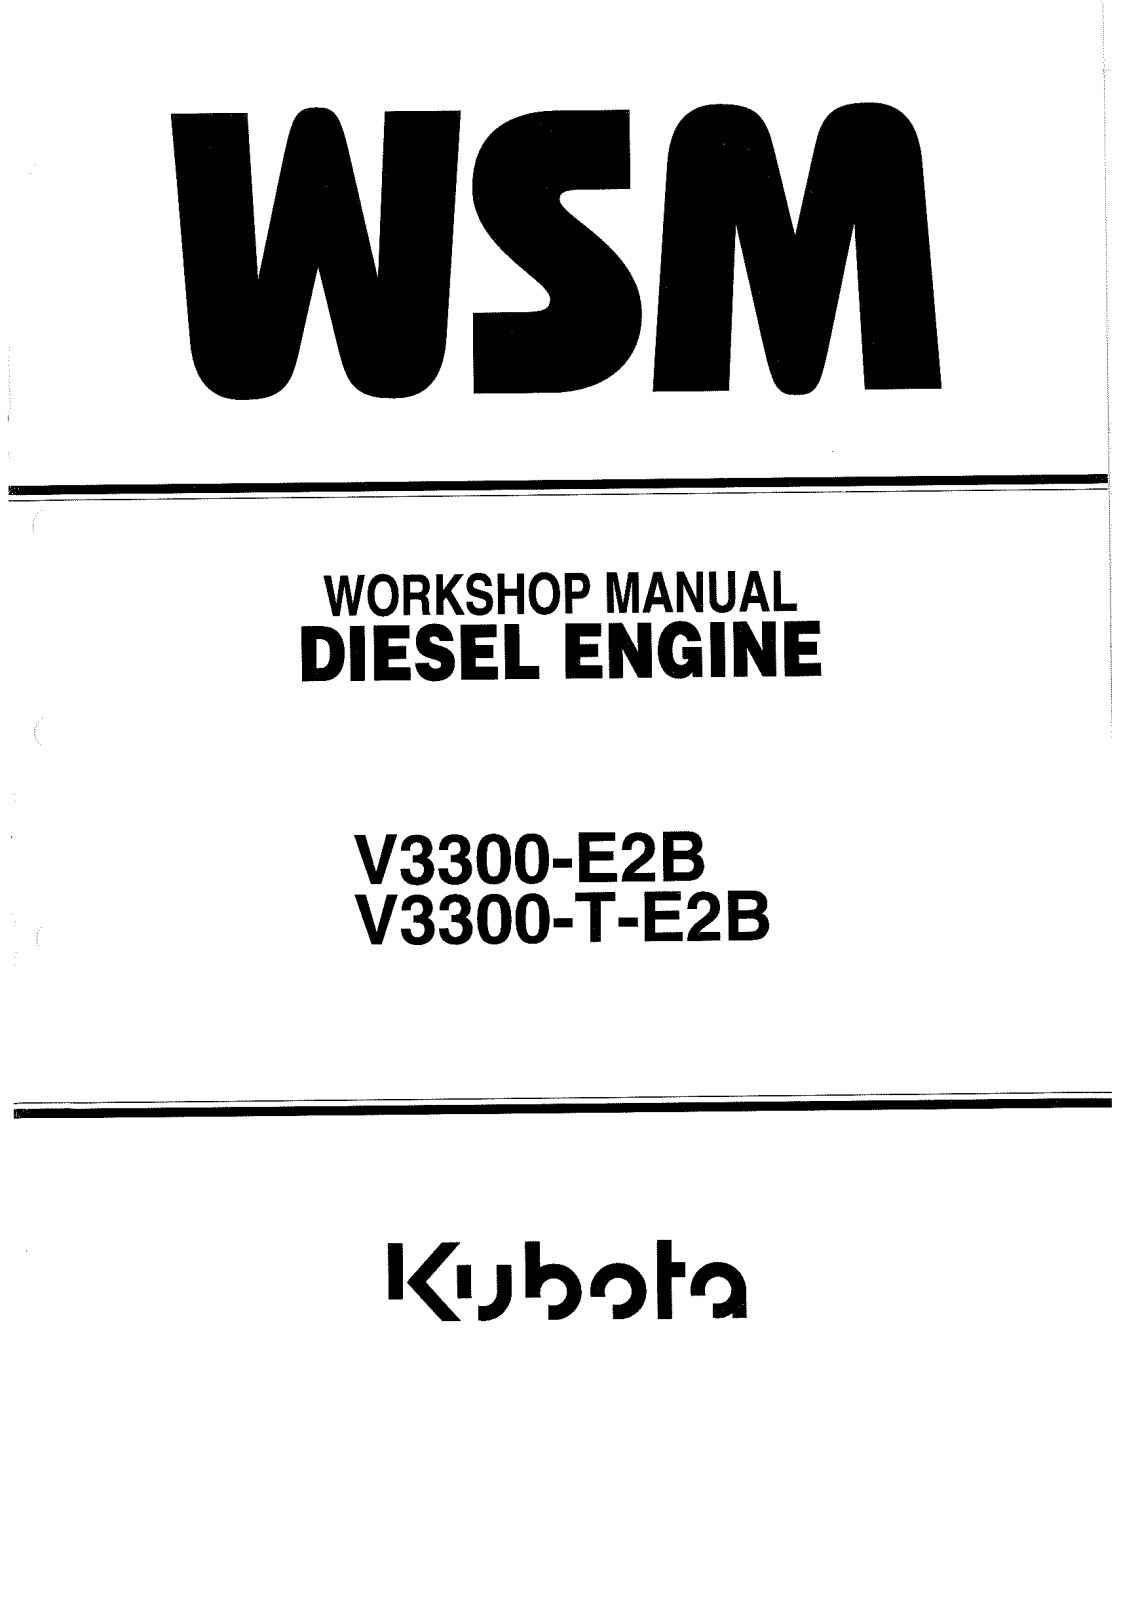 Kubota V3300 Workshop Manual